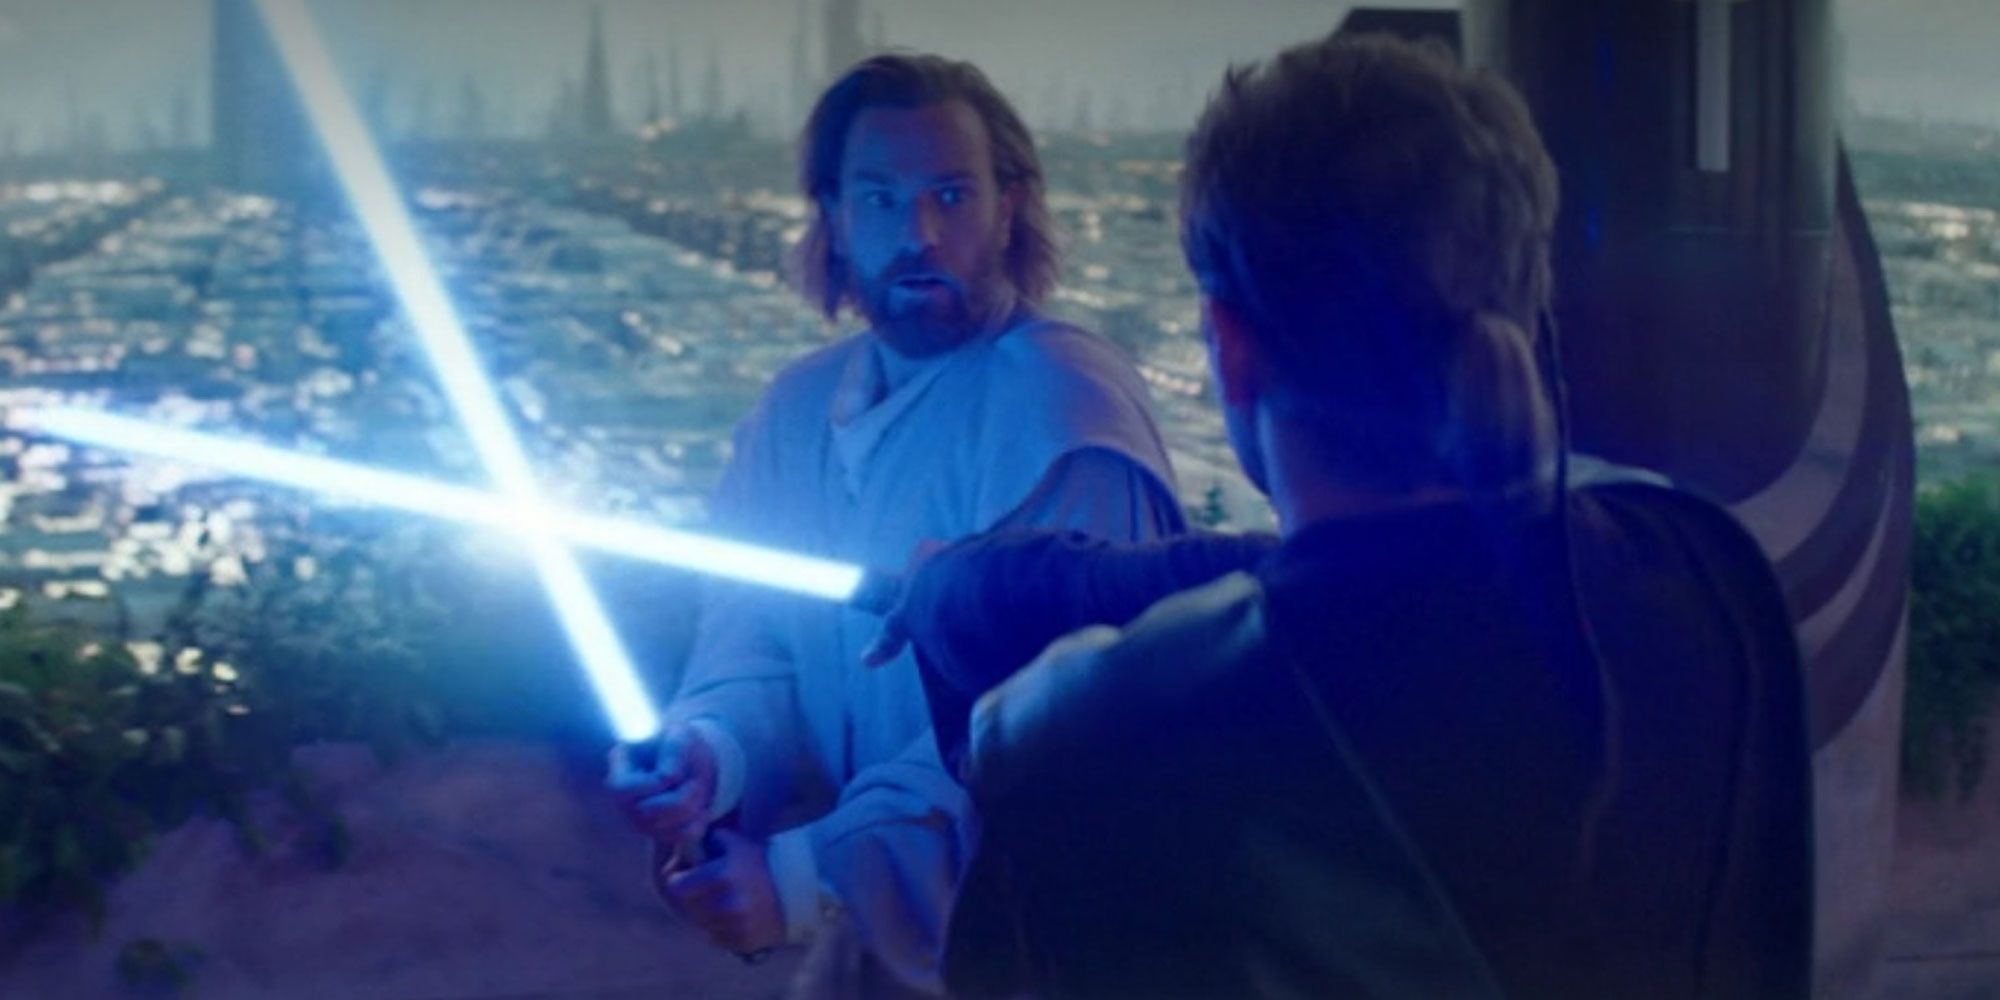 Obi Wan and Anakin dueling in a flashback